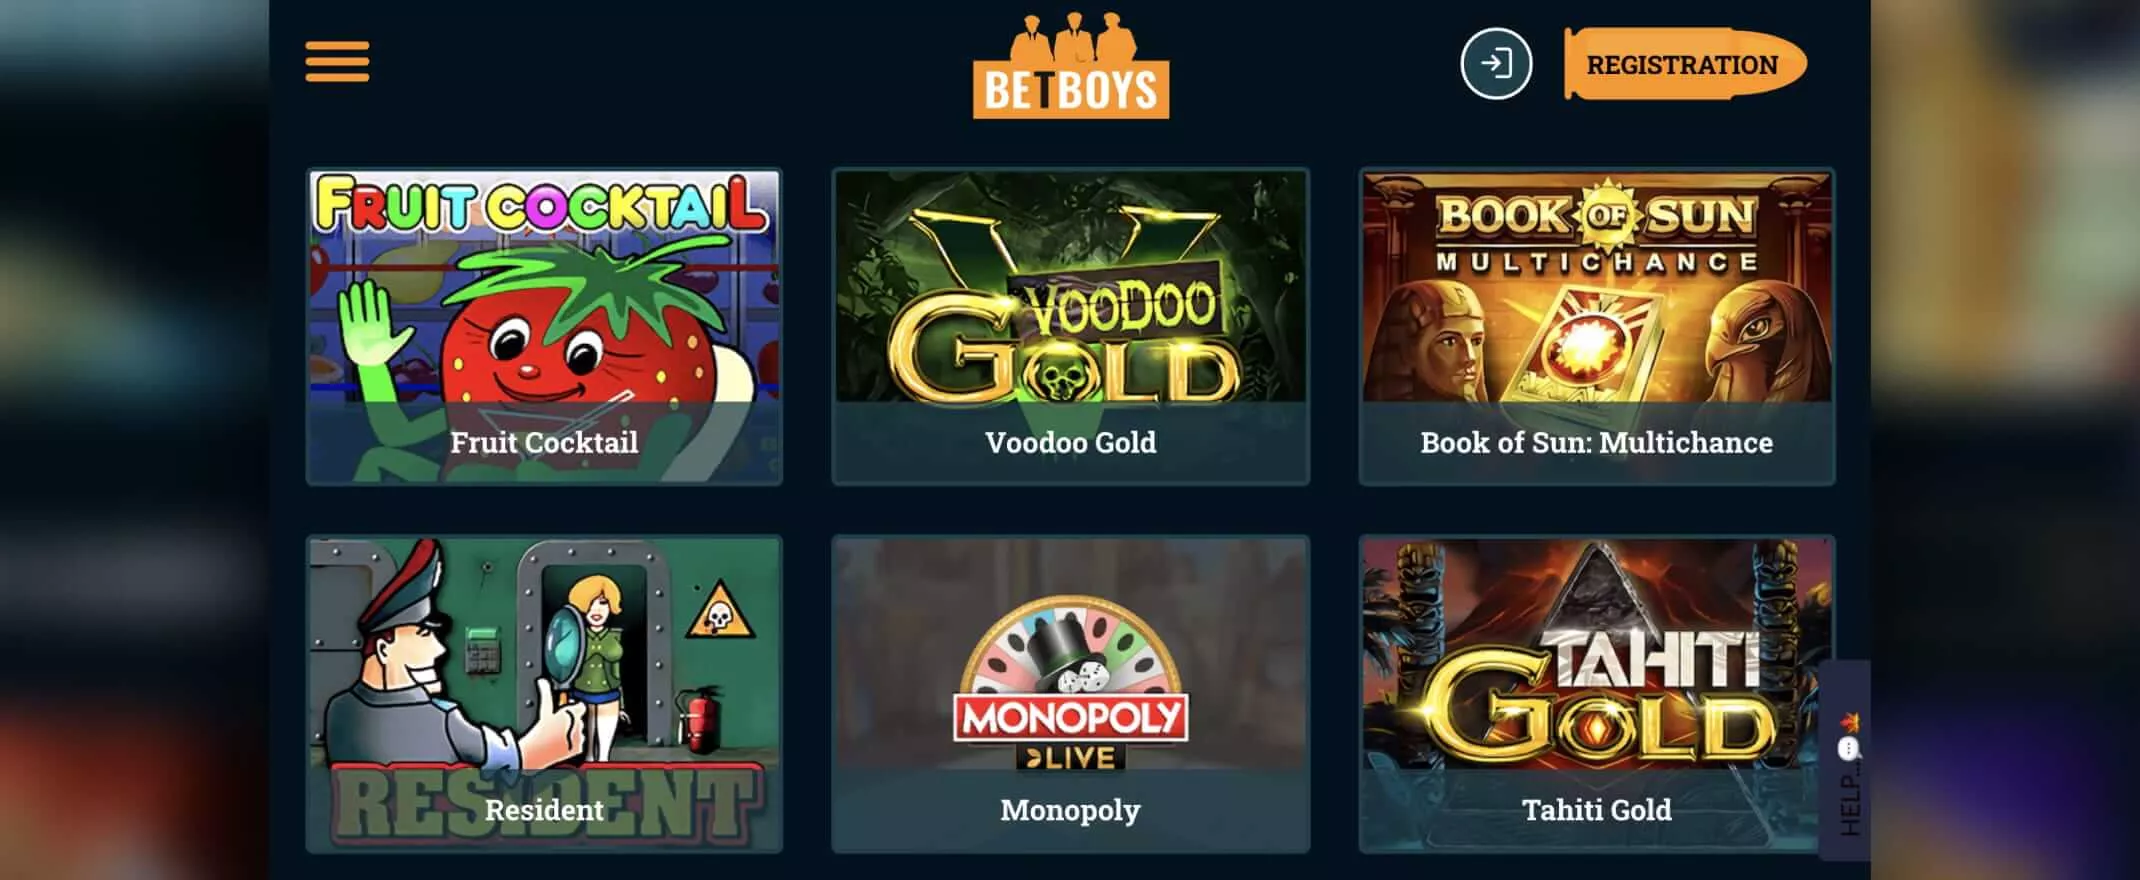 betboys casino games screenshot